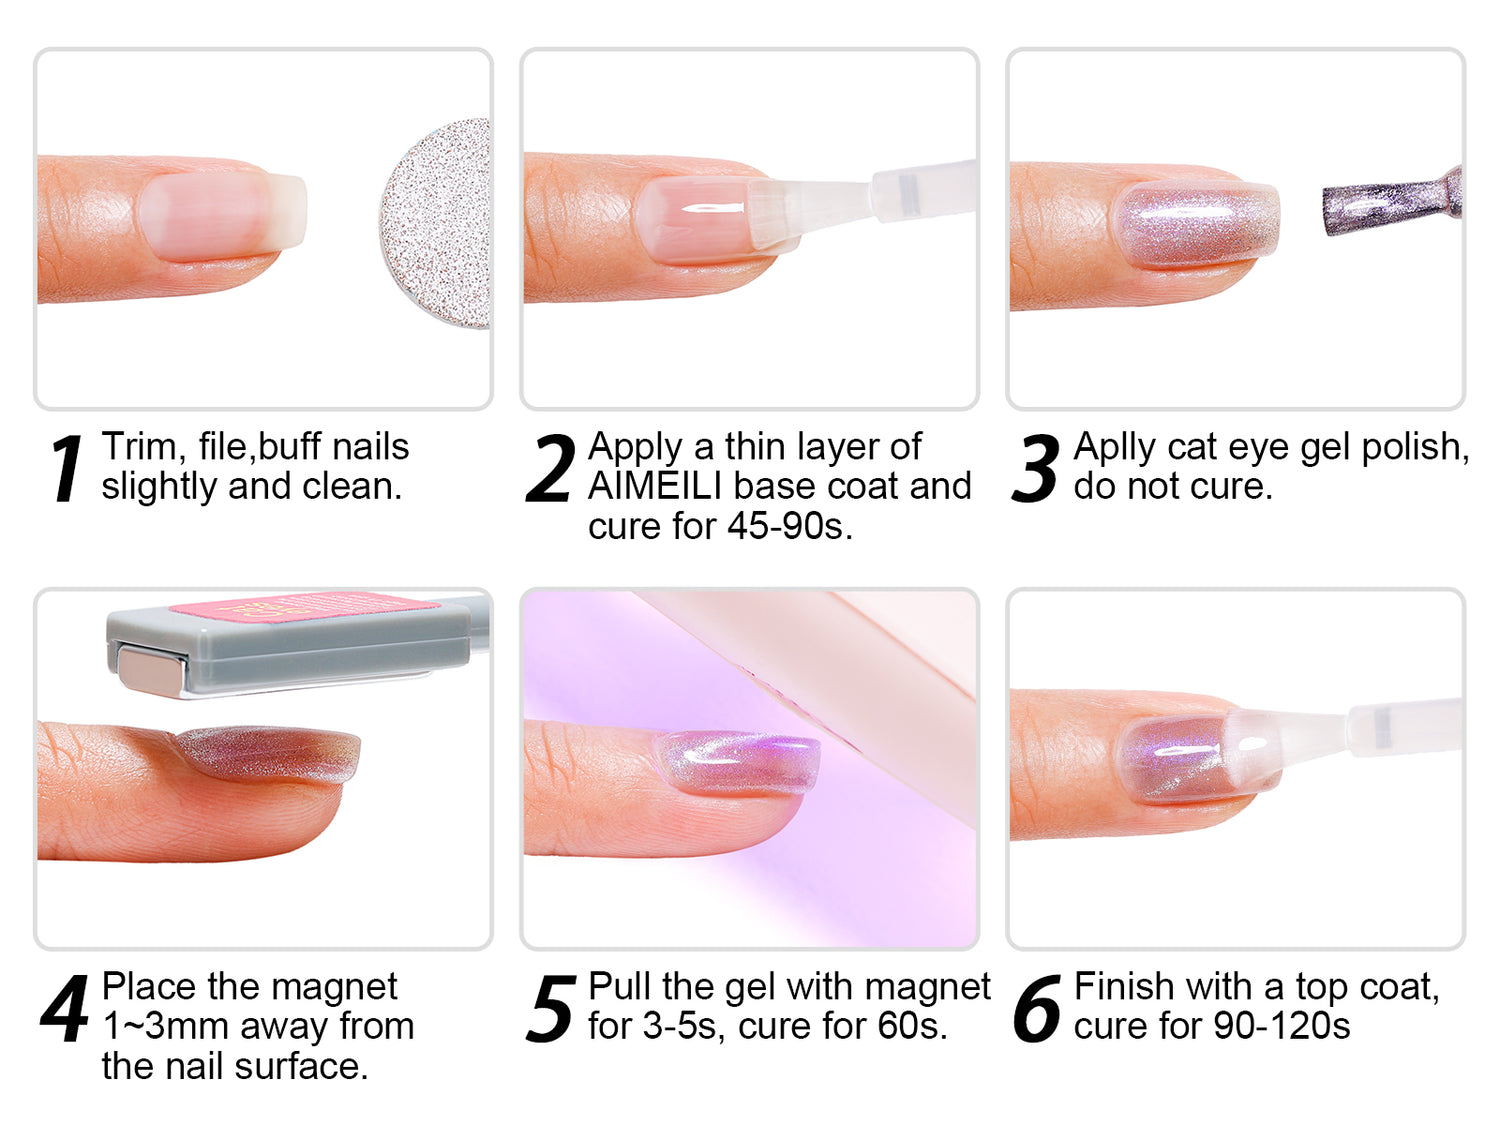 how to apply cat eye gel polish